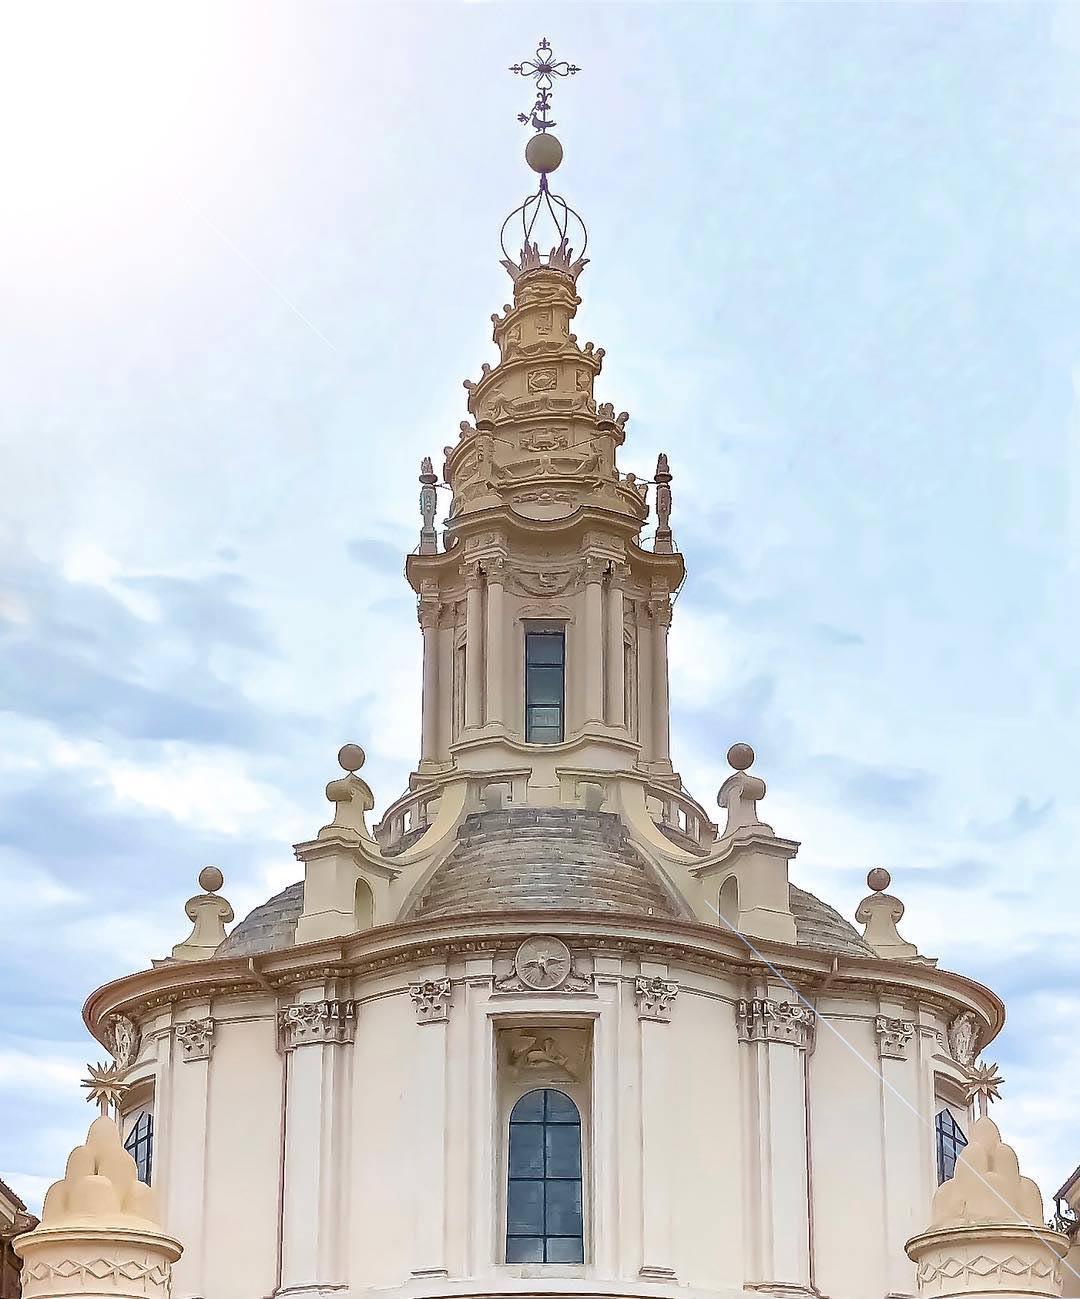 Chapelle Sant’Ivo alla Sapienza